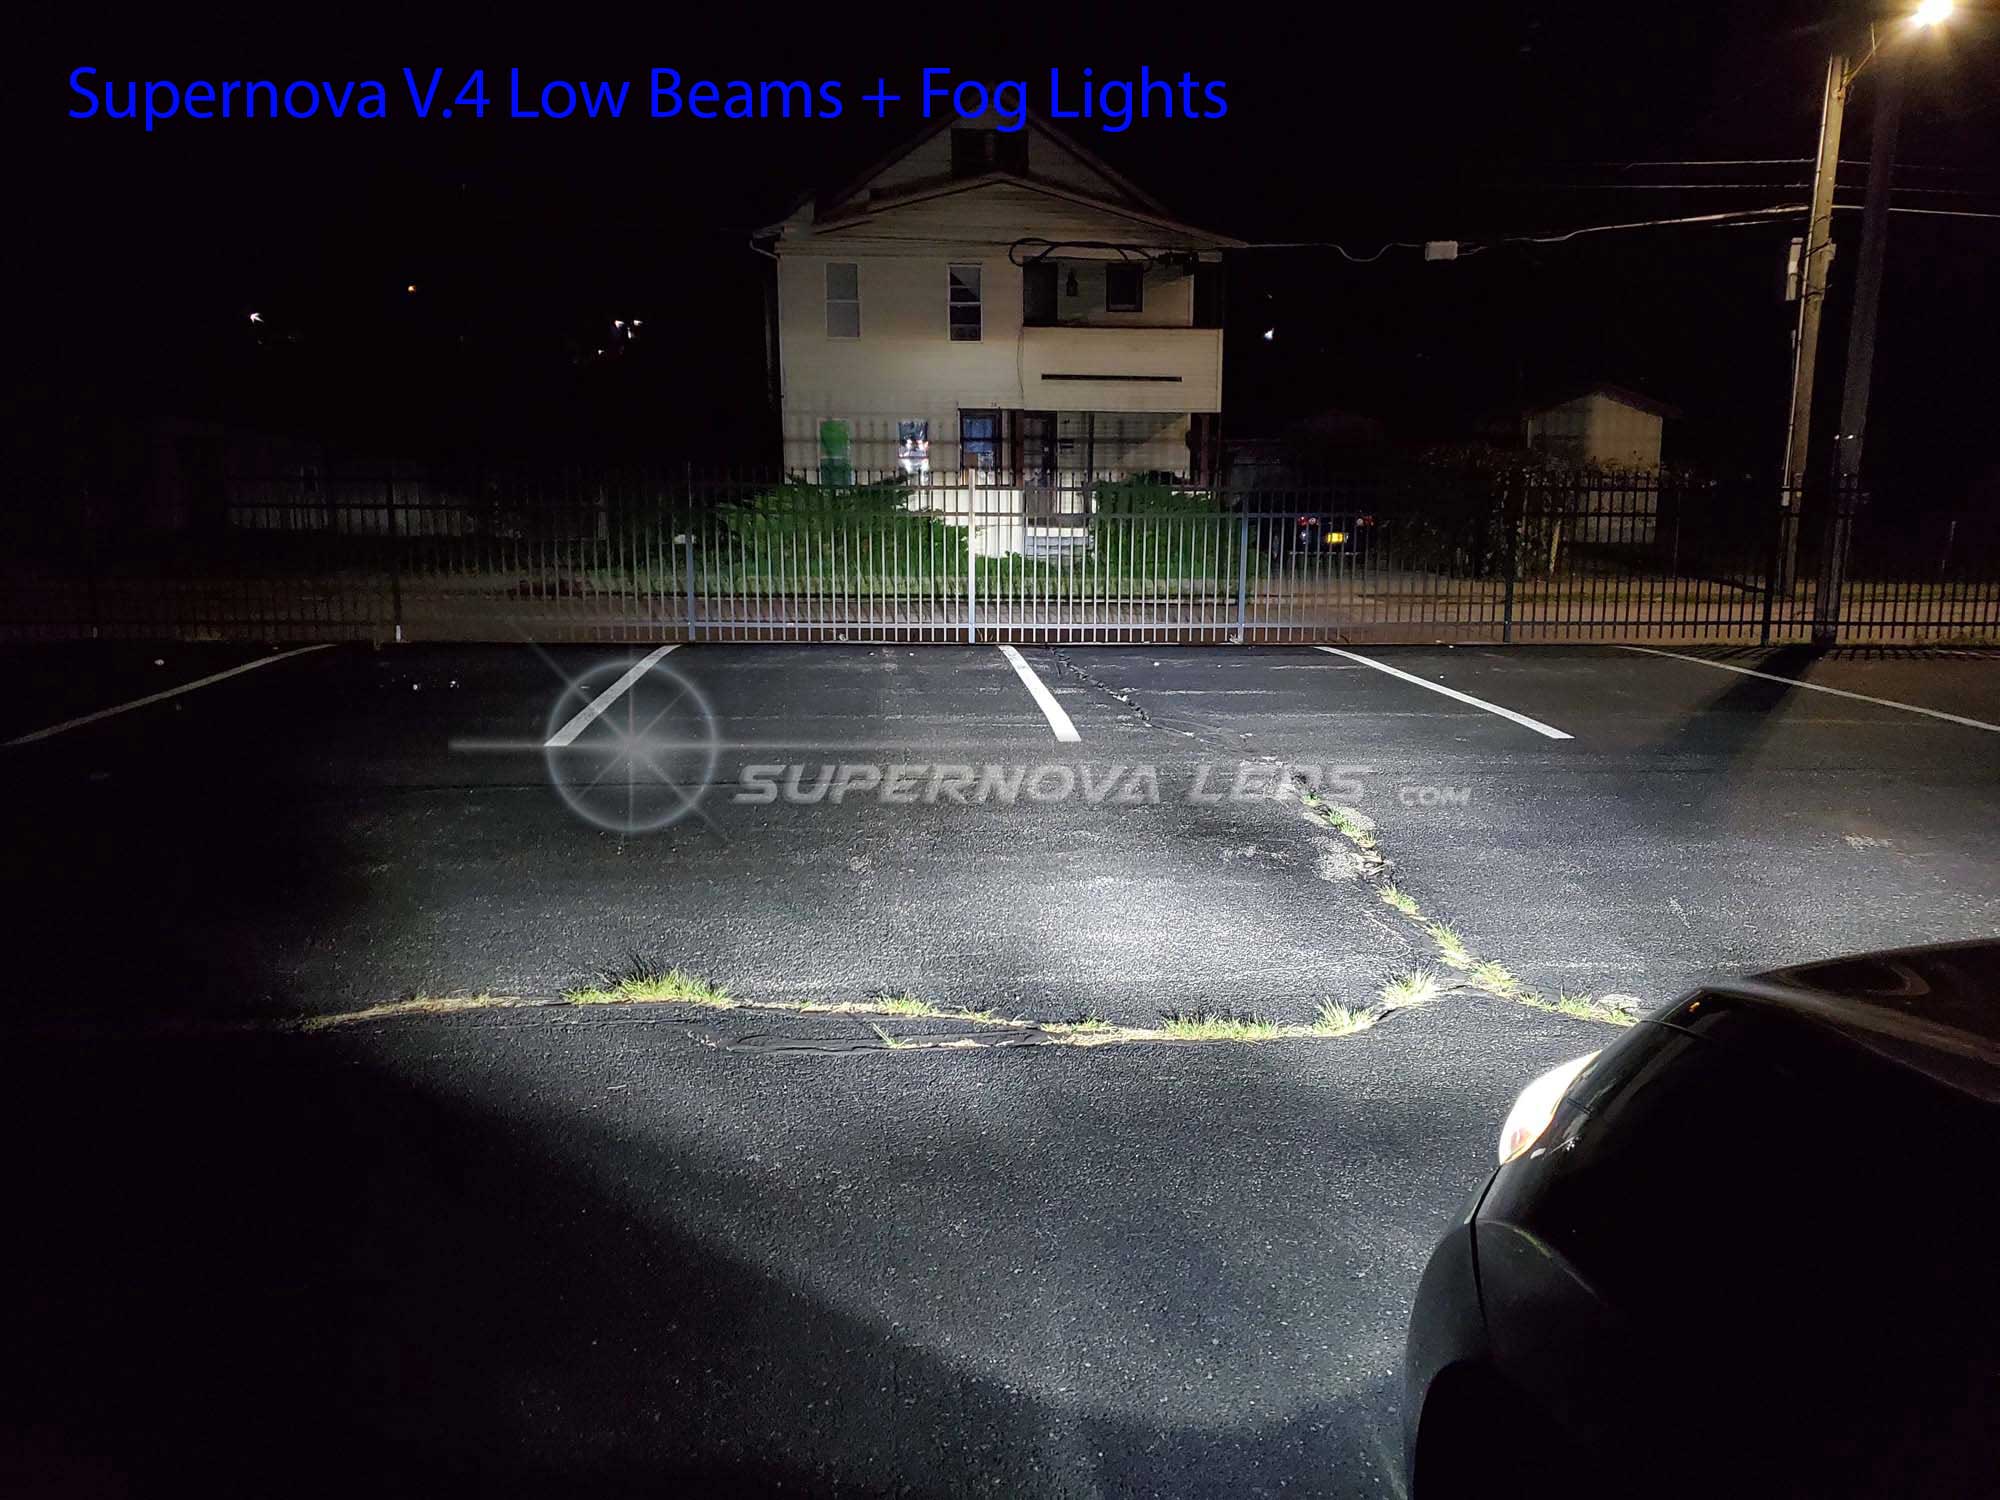 Supernova V.4 X LEDs in a Nissan Murano Low Beams + Fog Lights